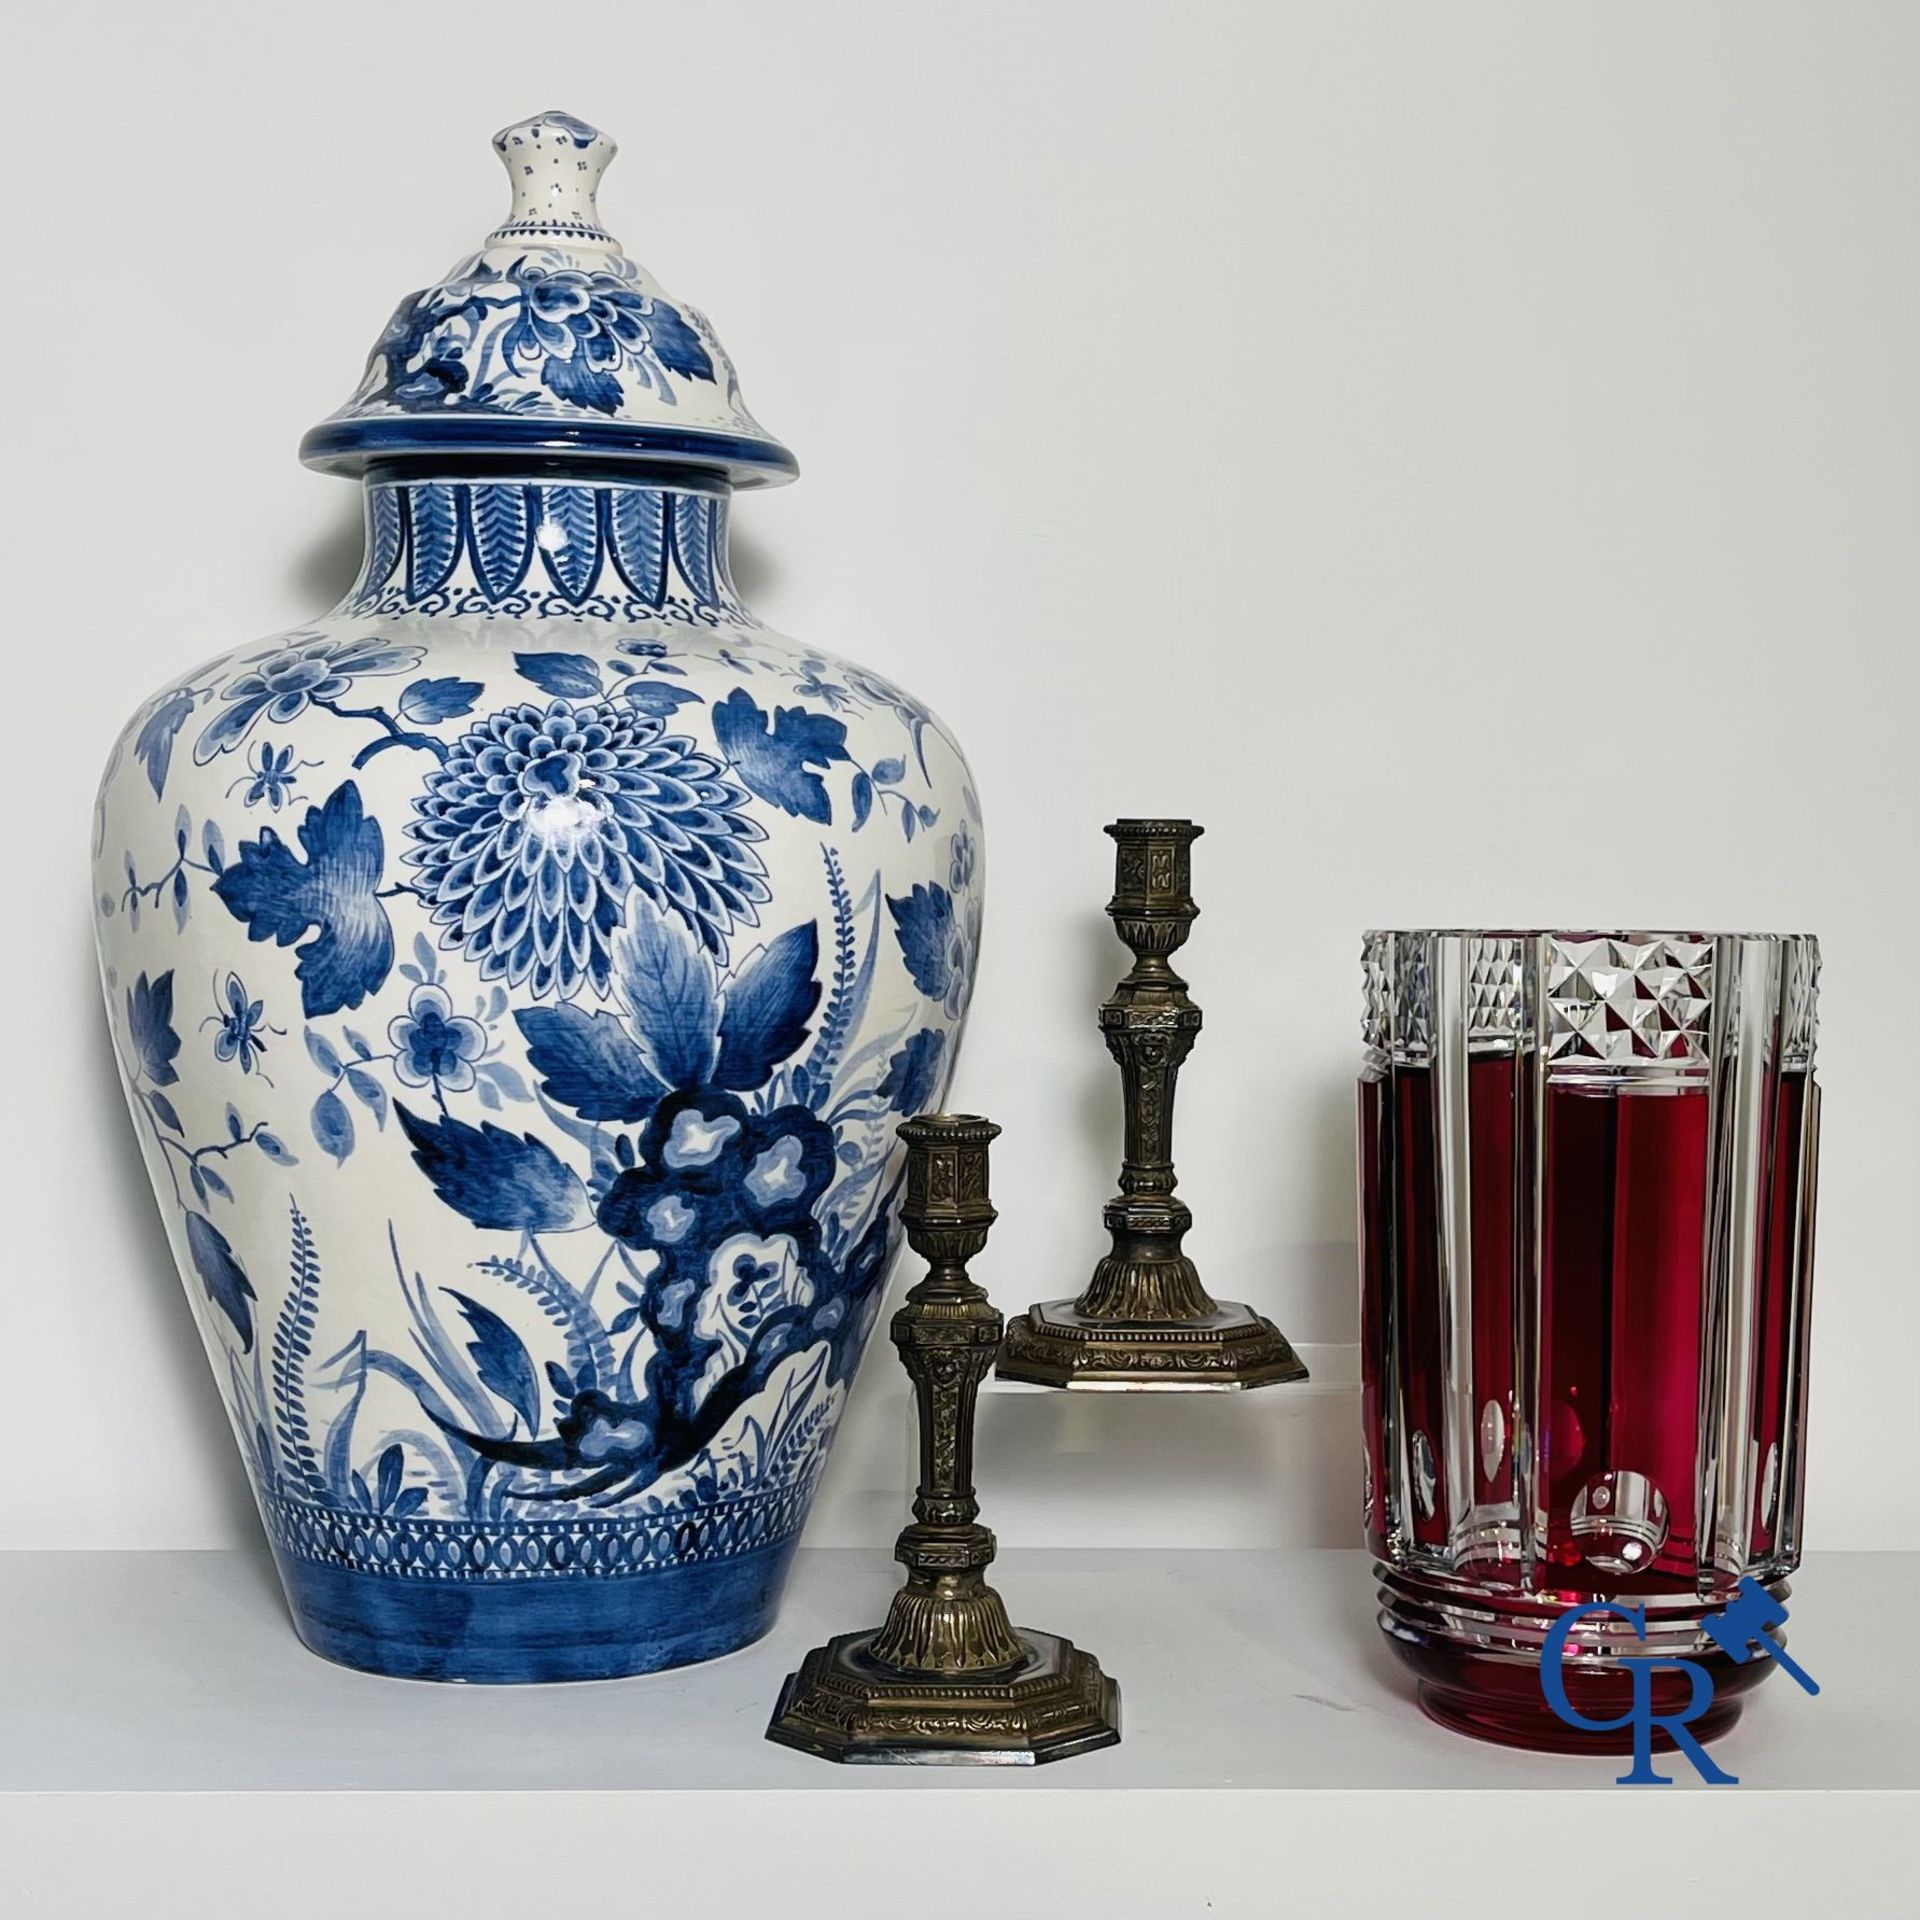 An Art Deco vase Val Saint Lambert, a pair of candlesticks Christofle model Duperier and a large vas